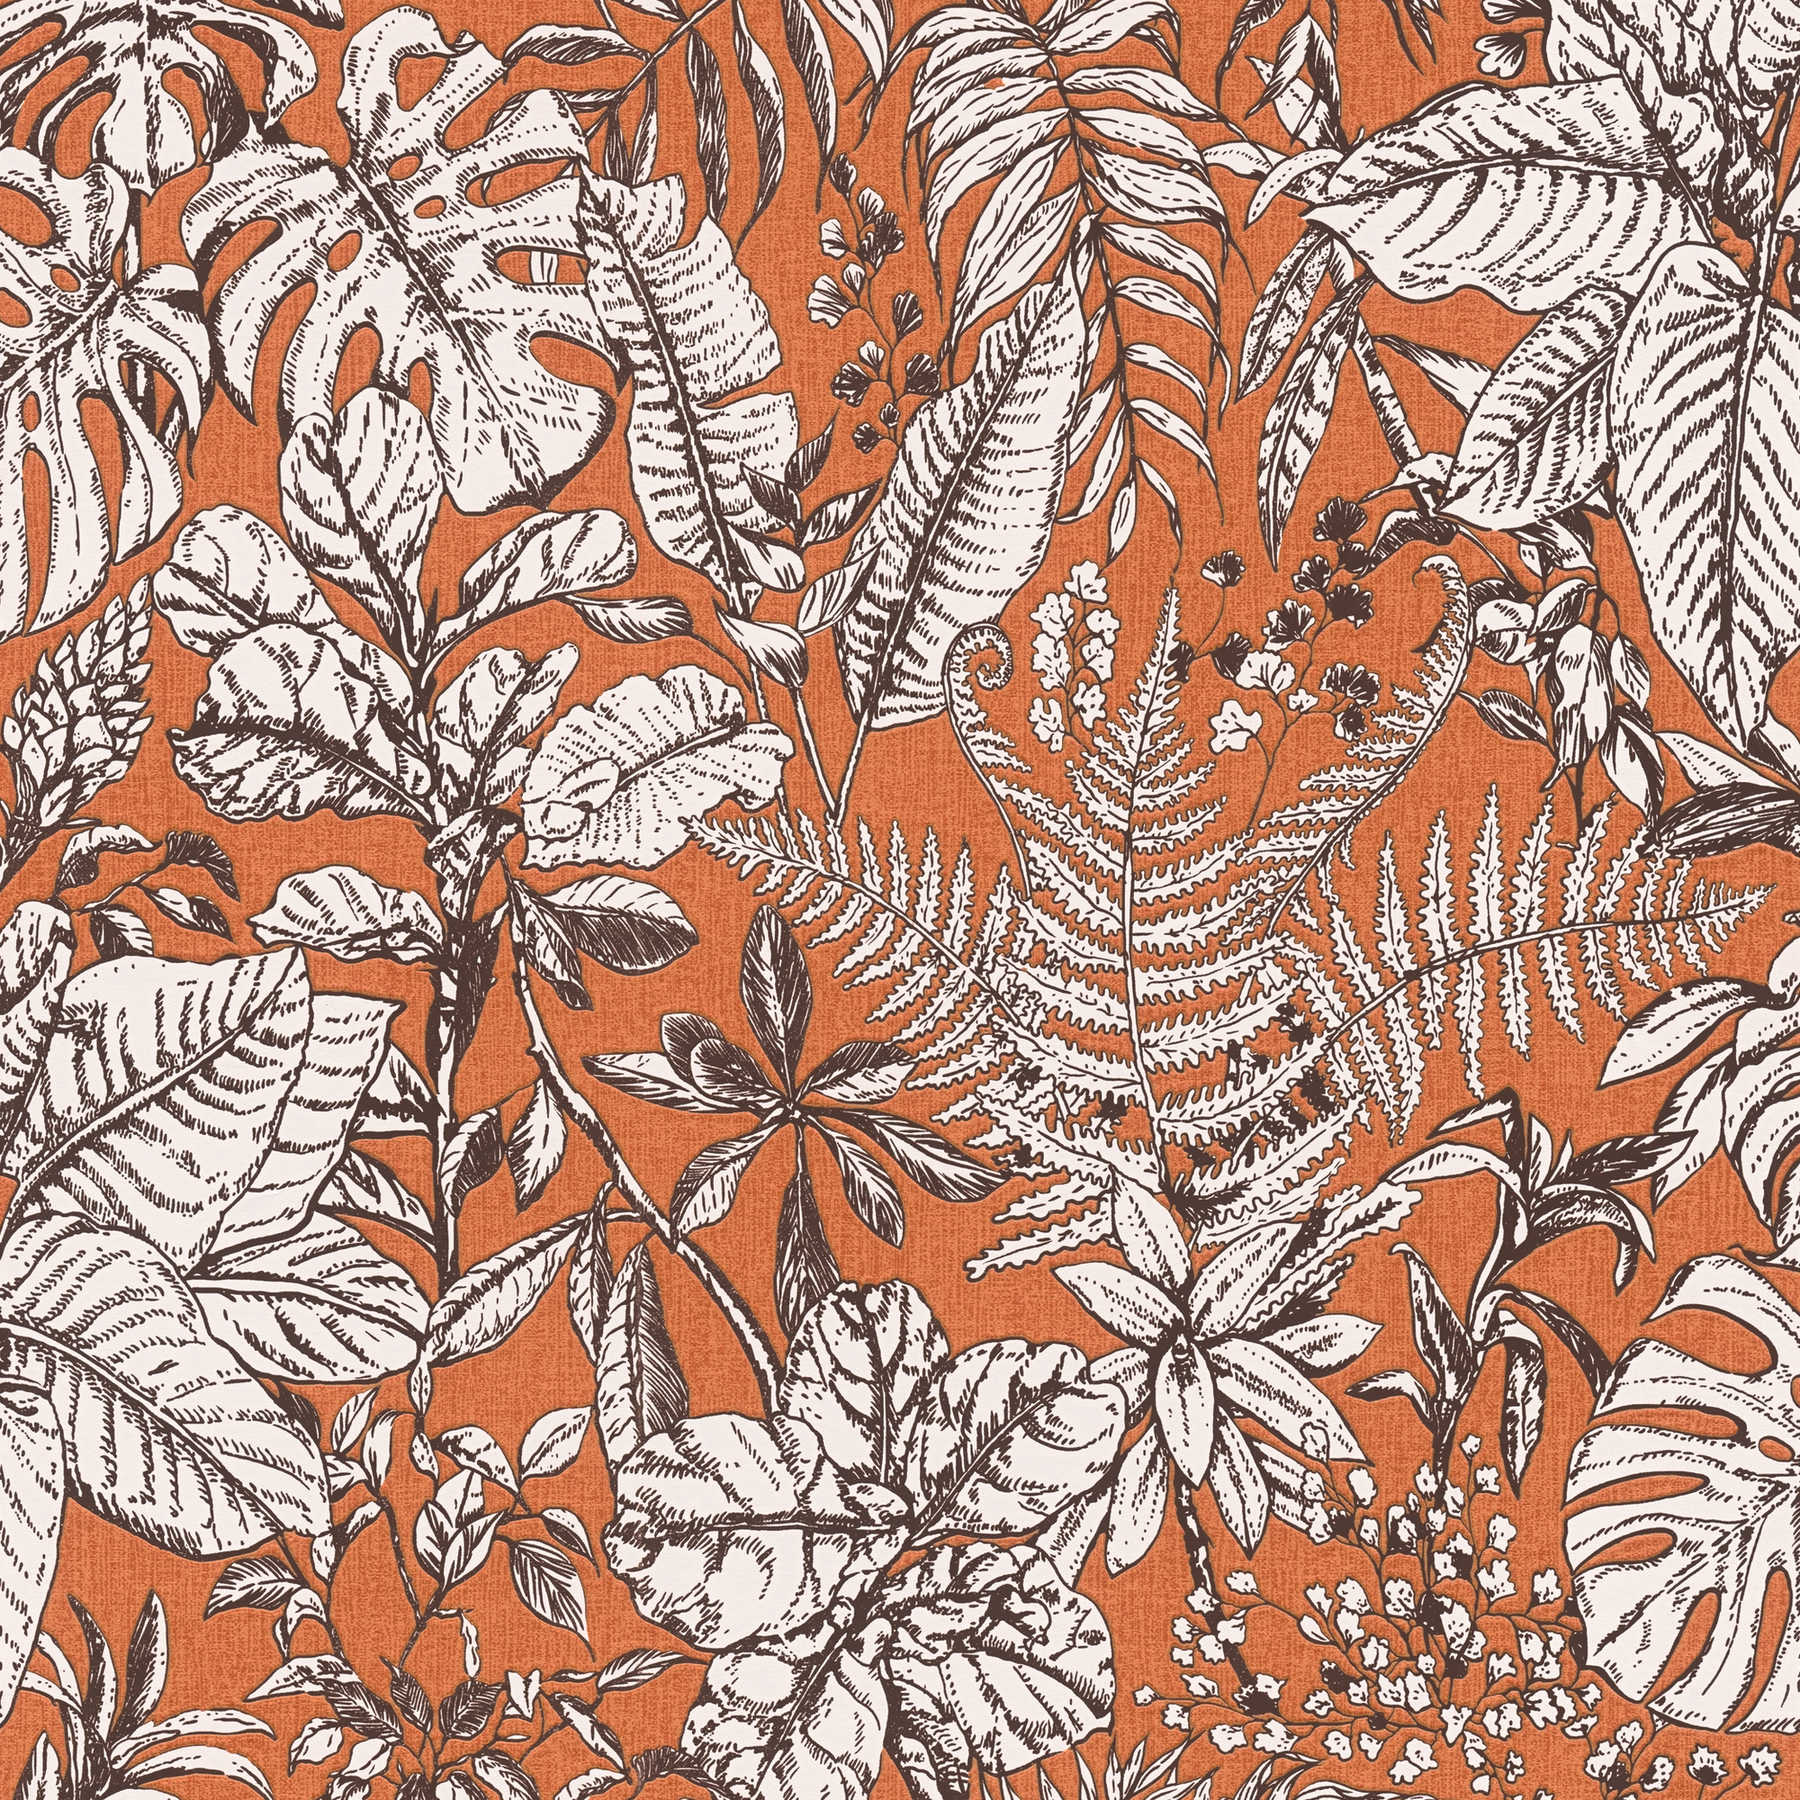 Pattern wallpaper jungle leaves, monstera & ferns - orange, white, brown
